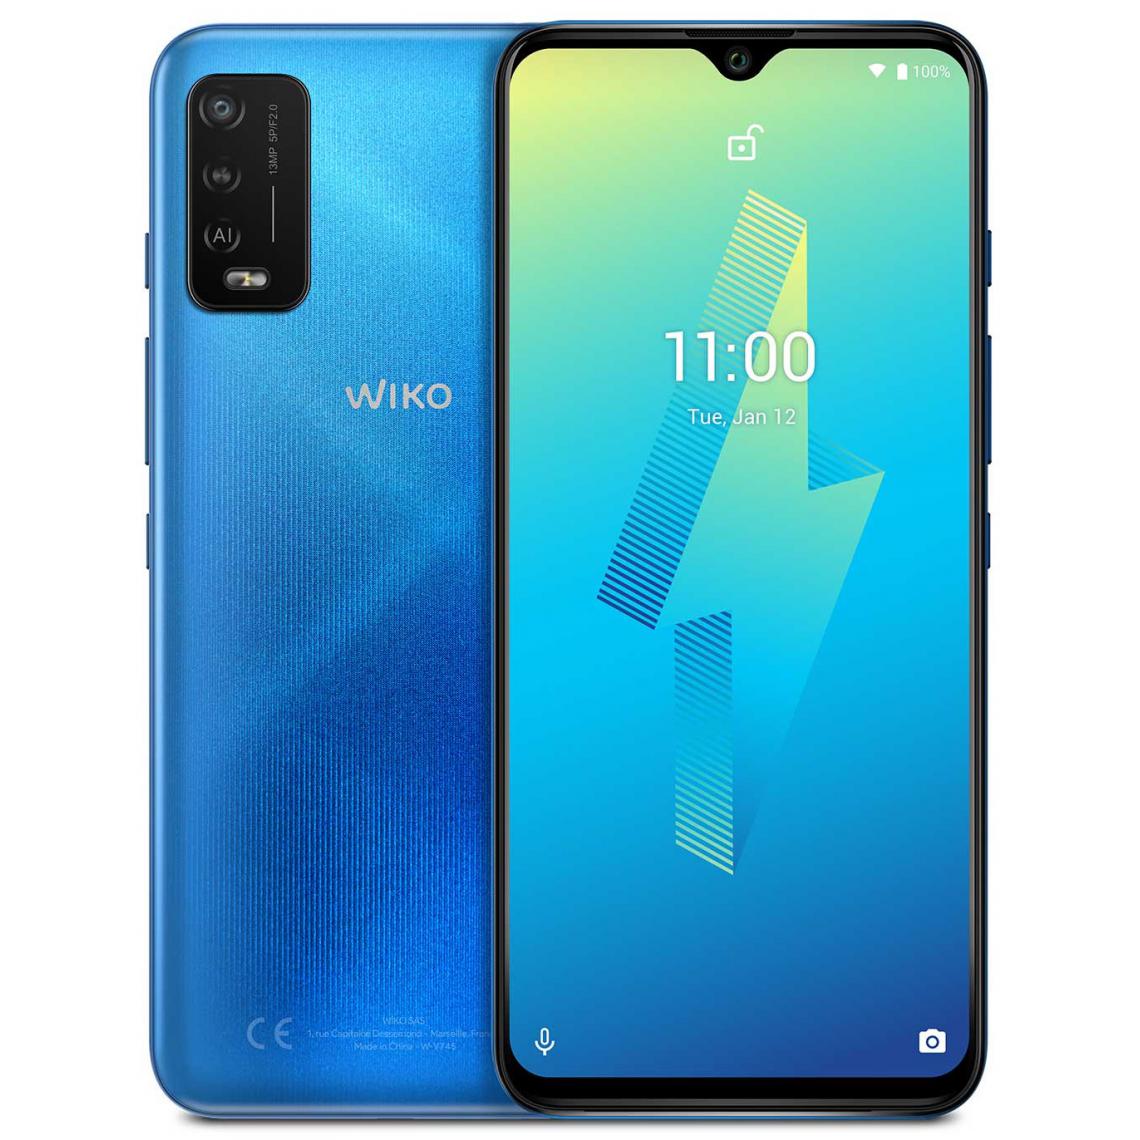 Wiko - WIKO Power U10 LS Denim Blue 32Go - Smartphone Android